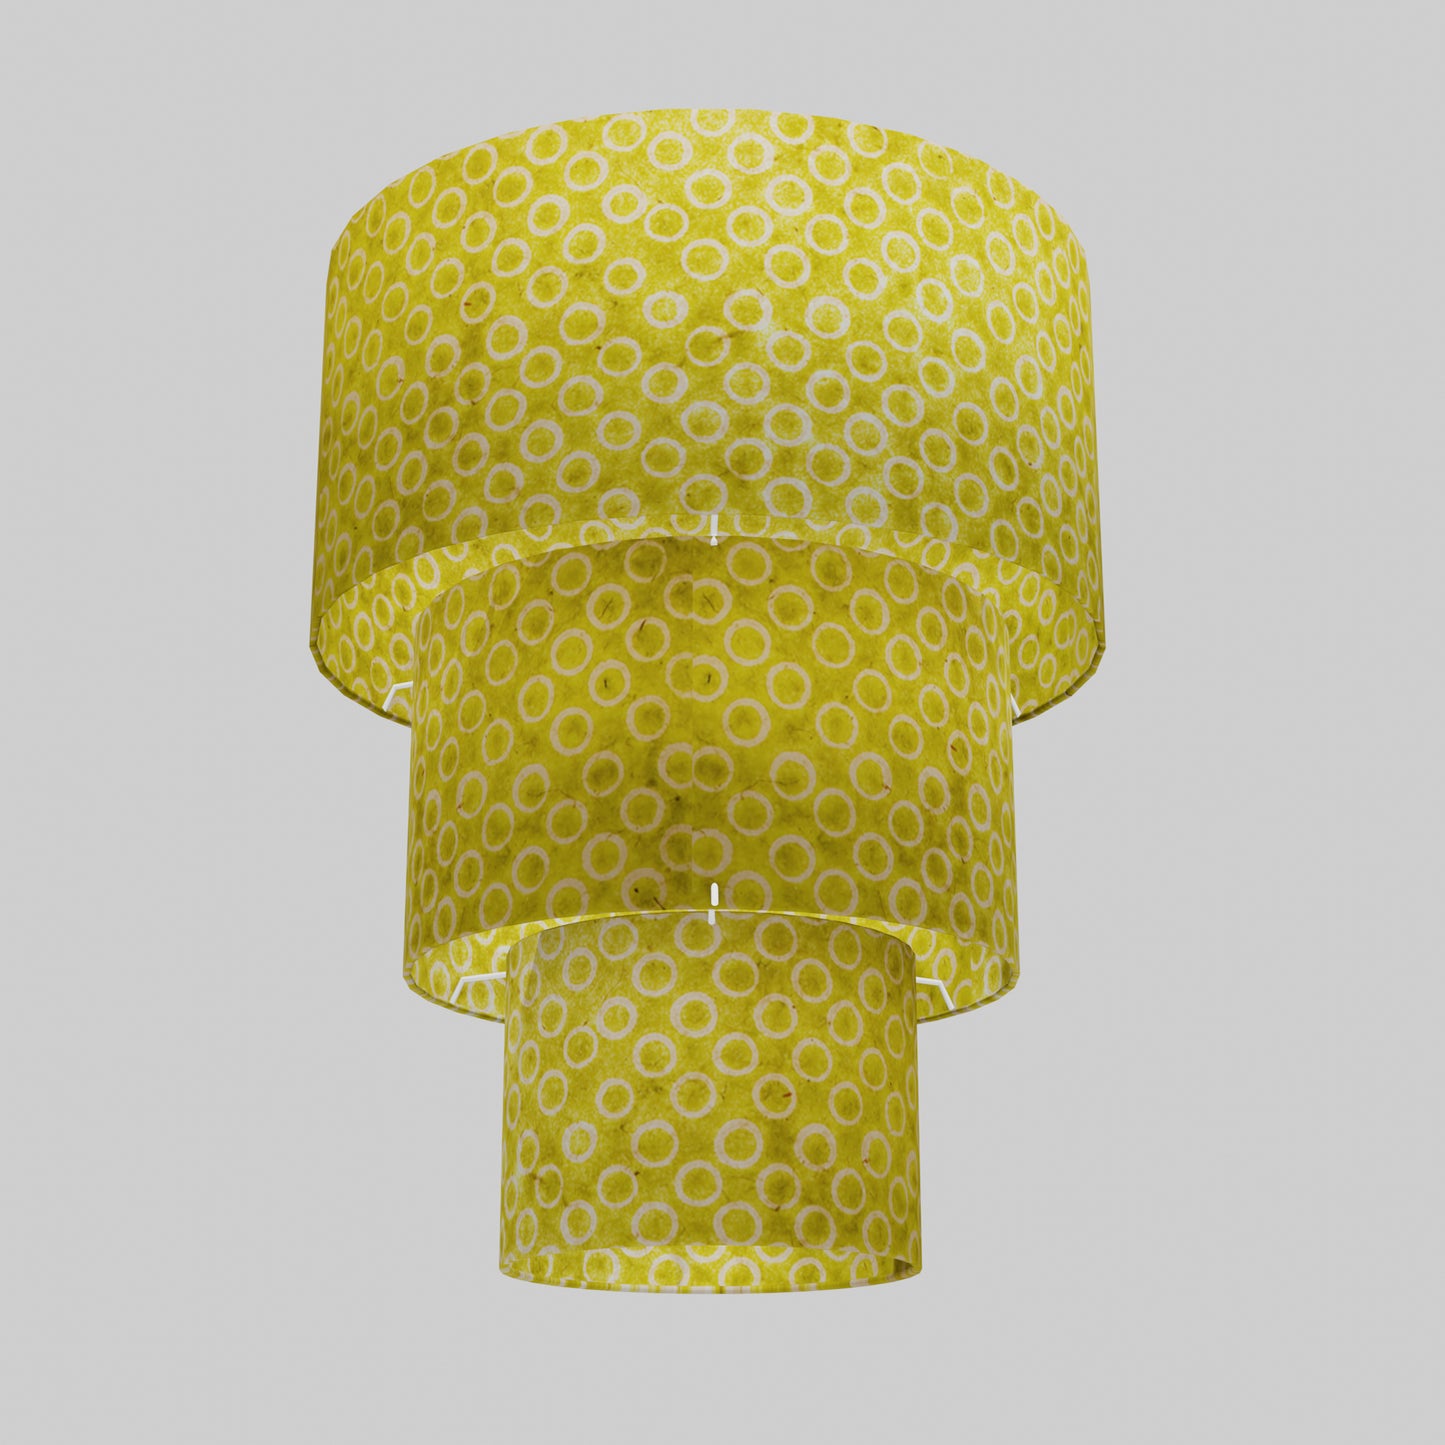 3 Tier Lamp Shade - P02 - Batik Lime Circles, 40cm x 20cm, 30cm x 17.5cm & 20cm x 15cm